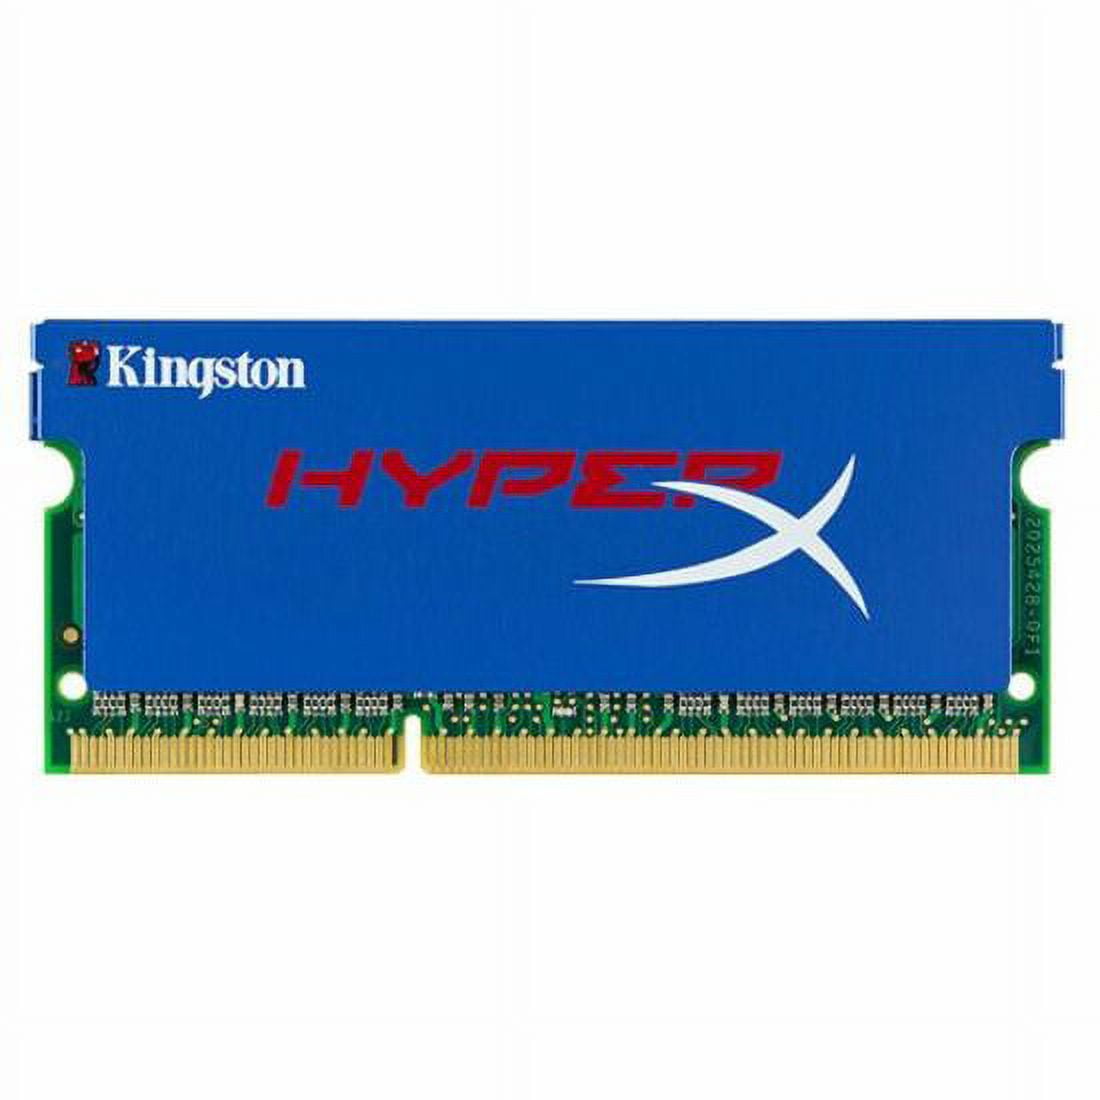 Kingston HyperX 4GB DDR3 SDRAM Memory Module